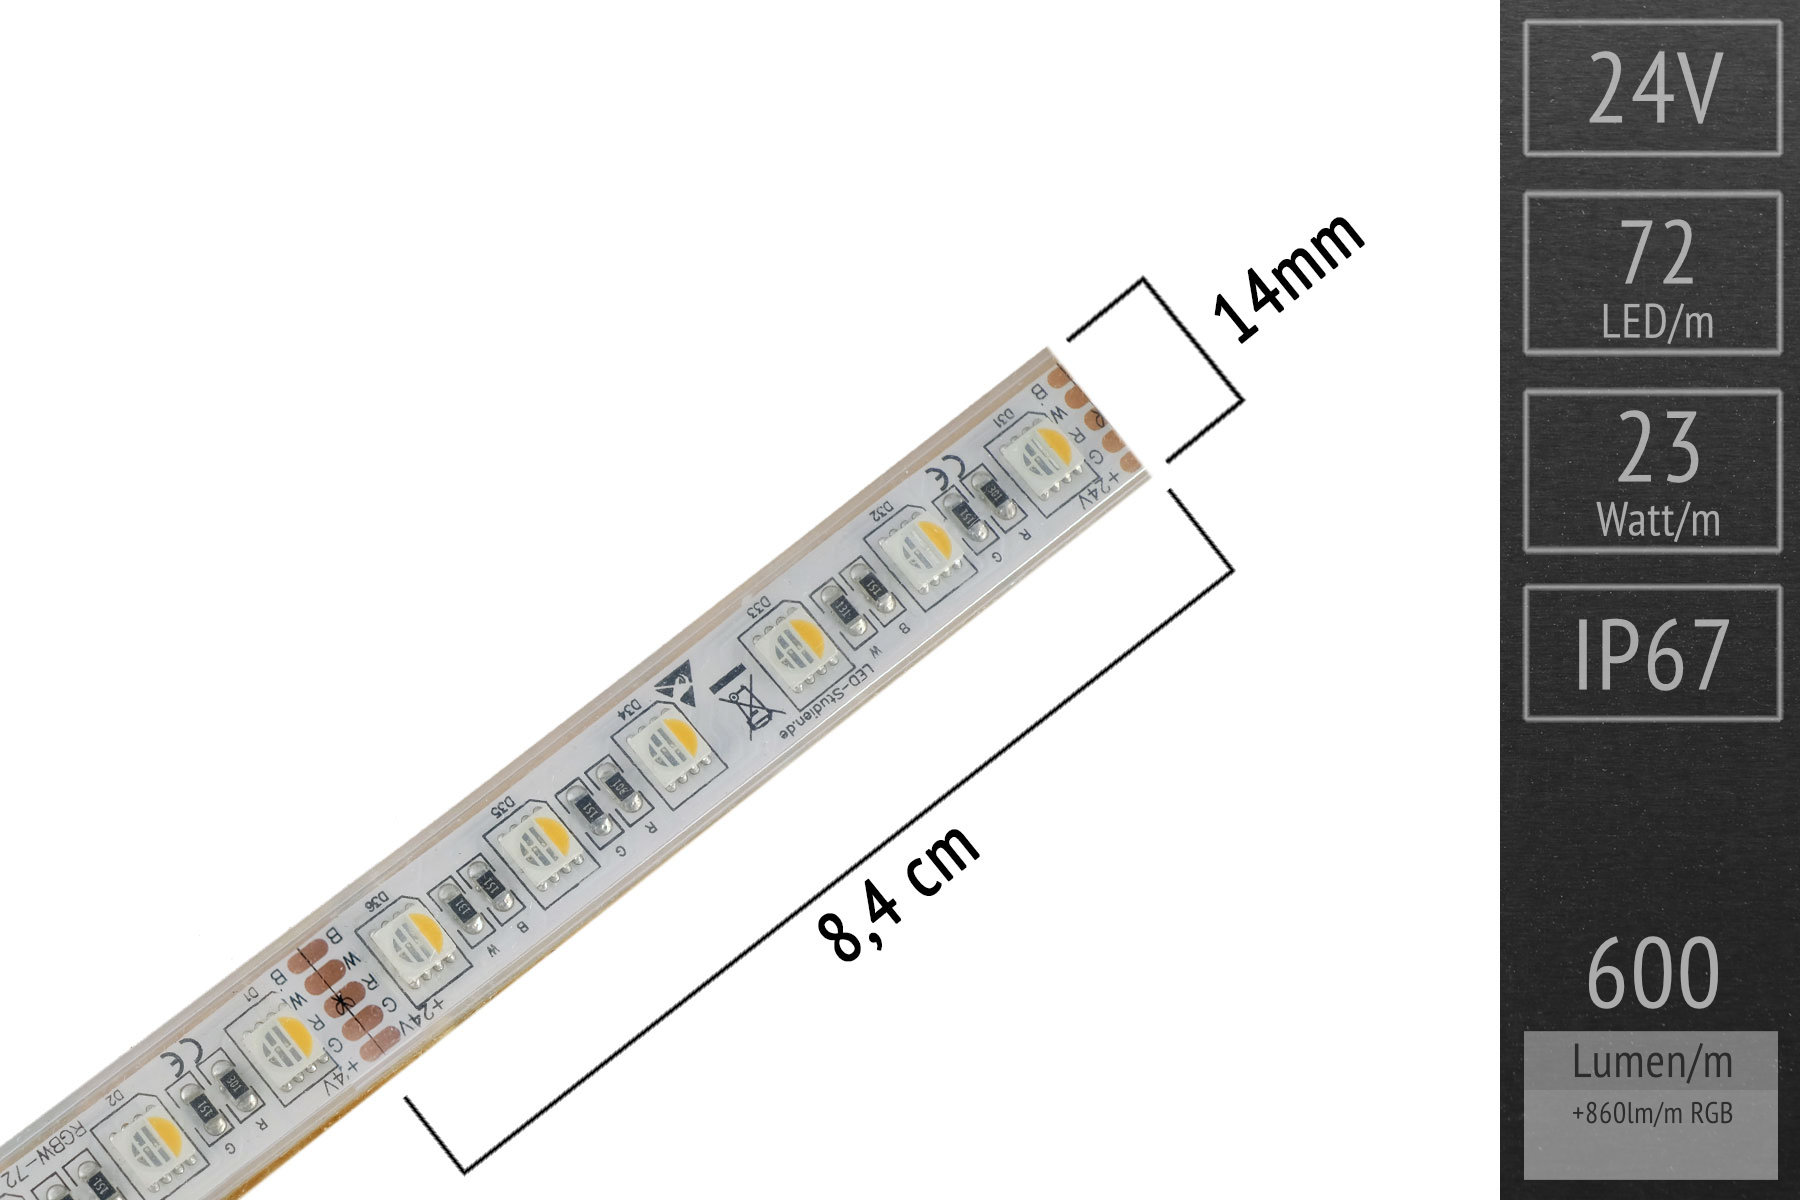 RGBWW 4in1 im Silikonschlauch: 72 LEDs/m - IP67 - 14mm breit